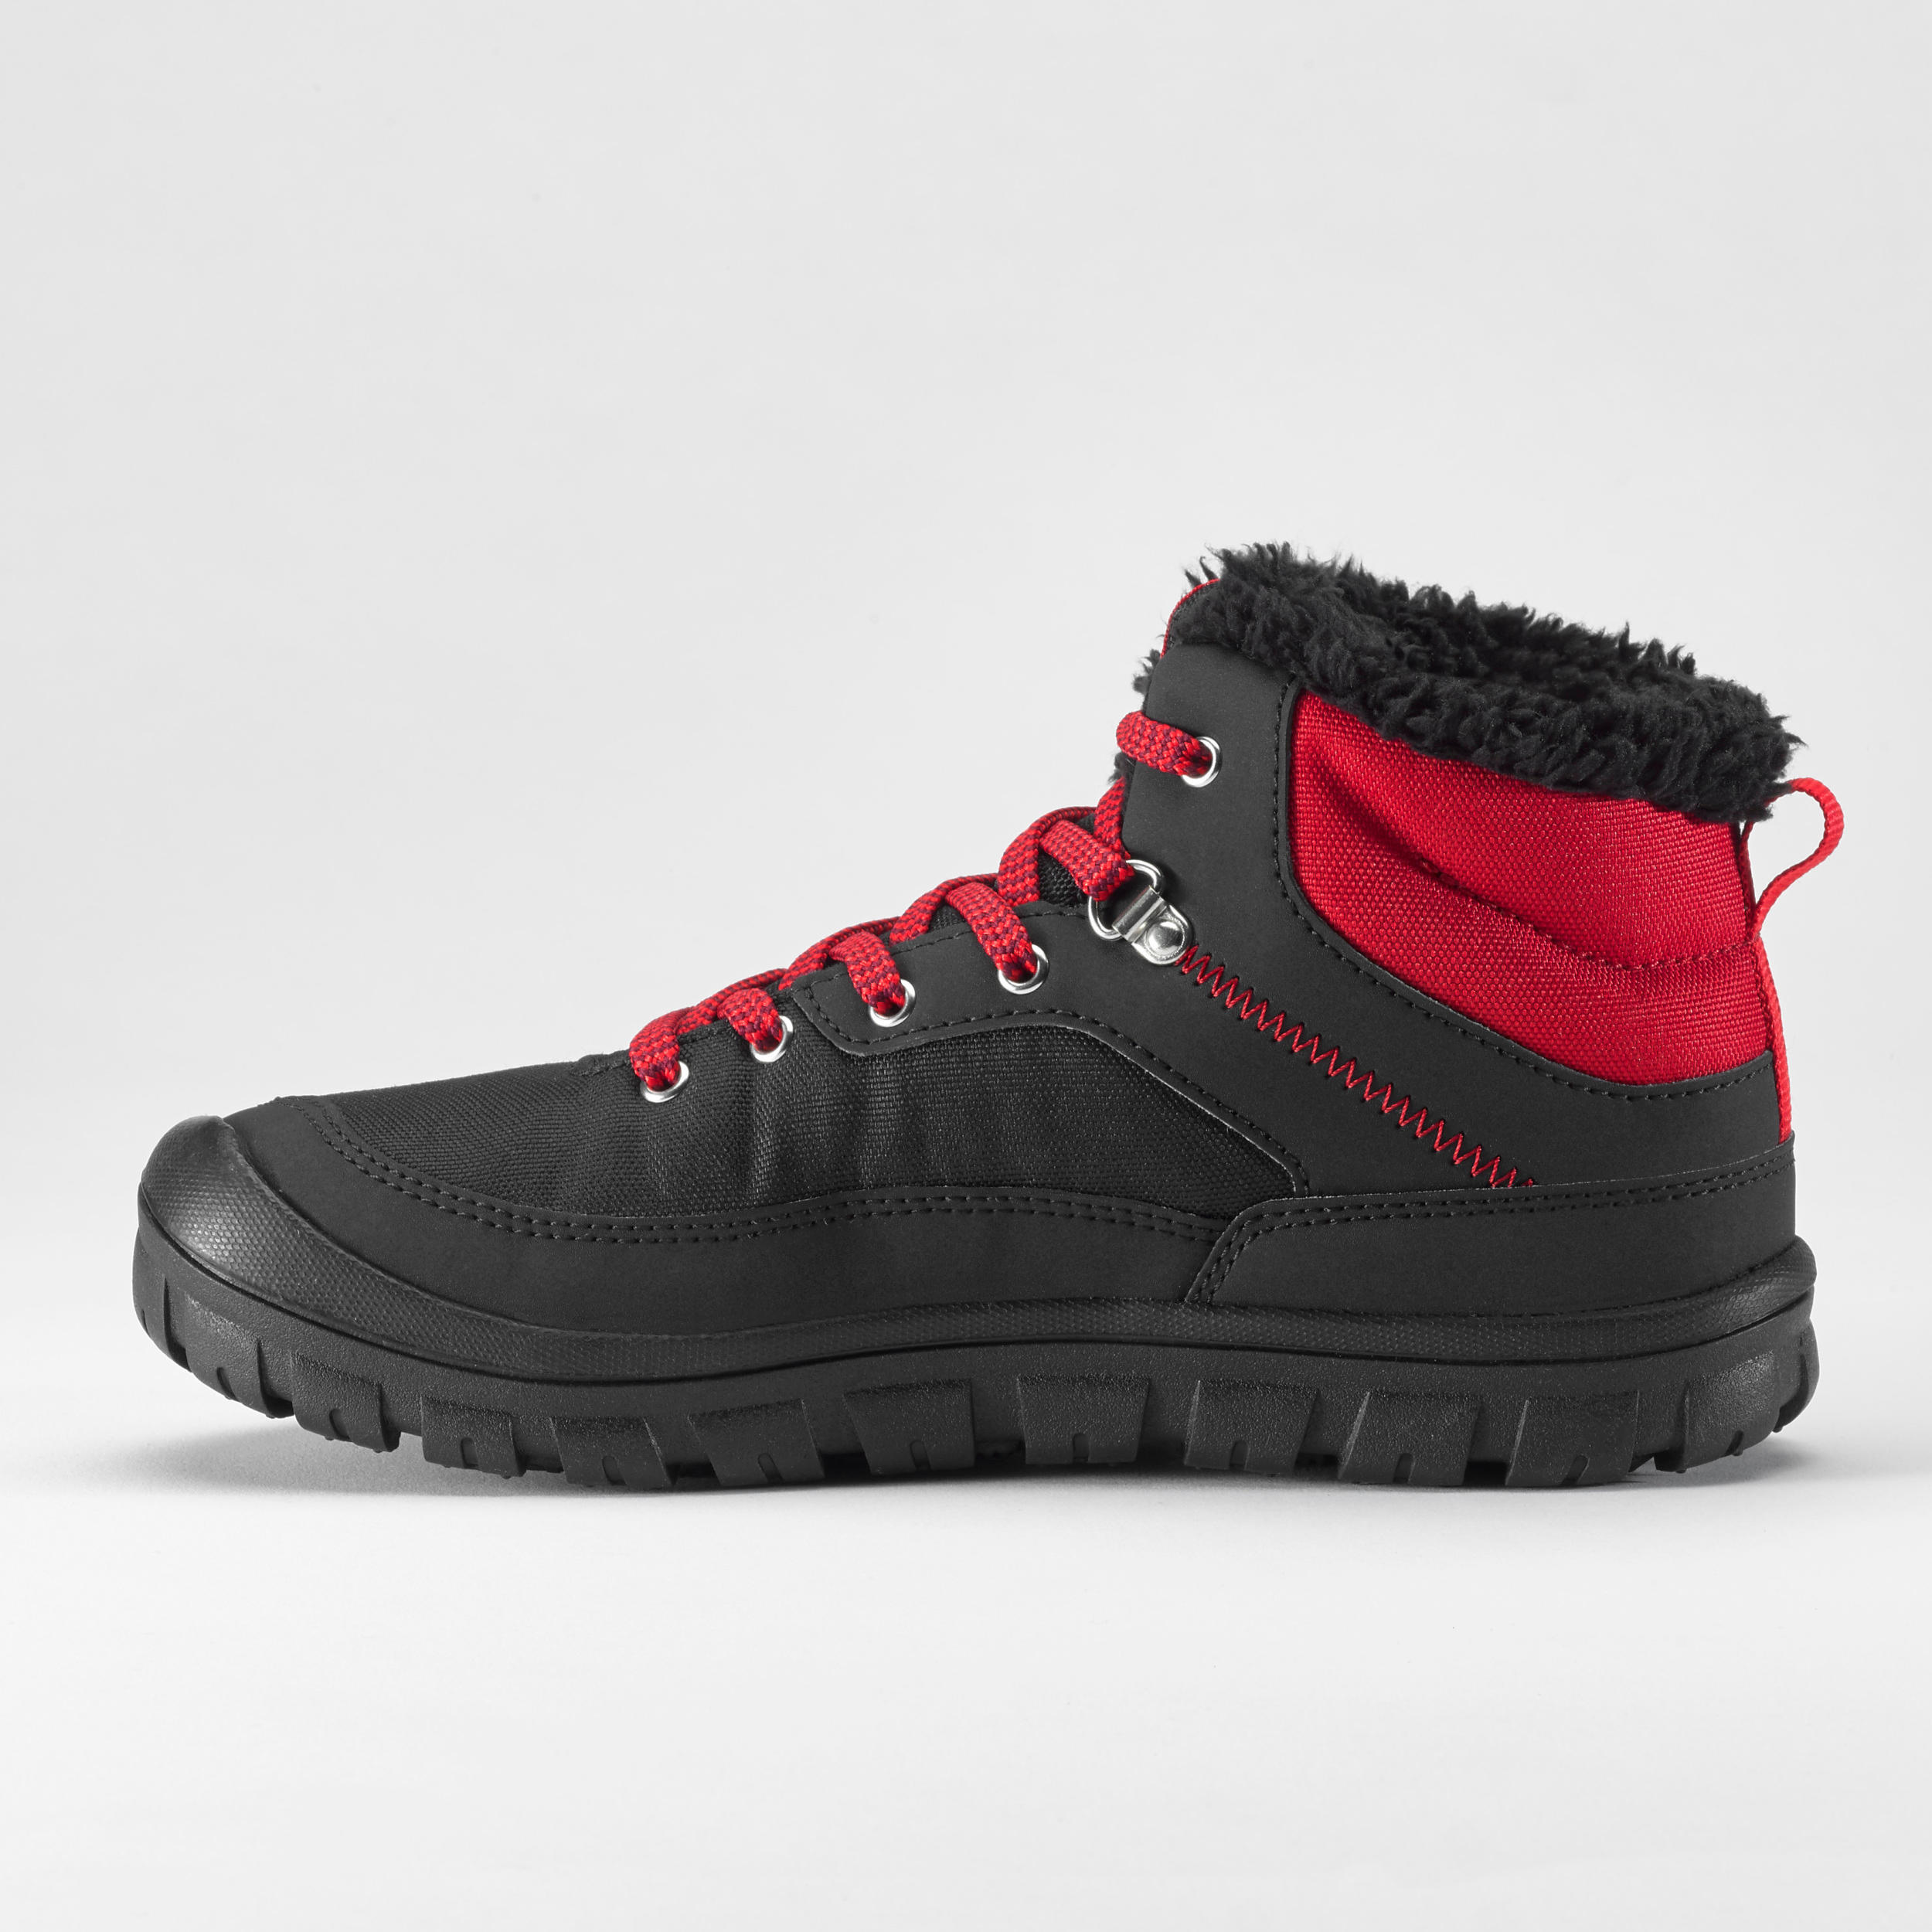 Kids’ Warm, Waterproof Lace-up Hiking Boots SH100 Warm Size 1 - 5.5 2/7